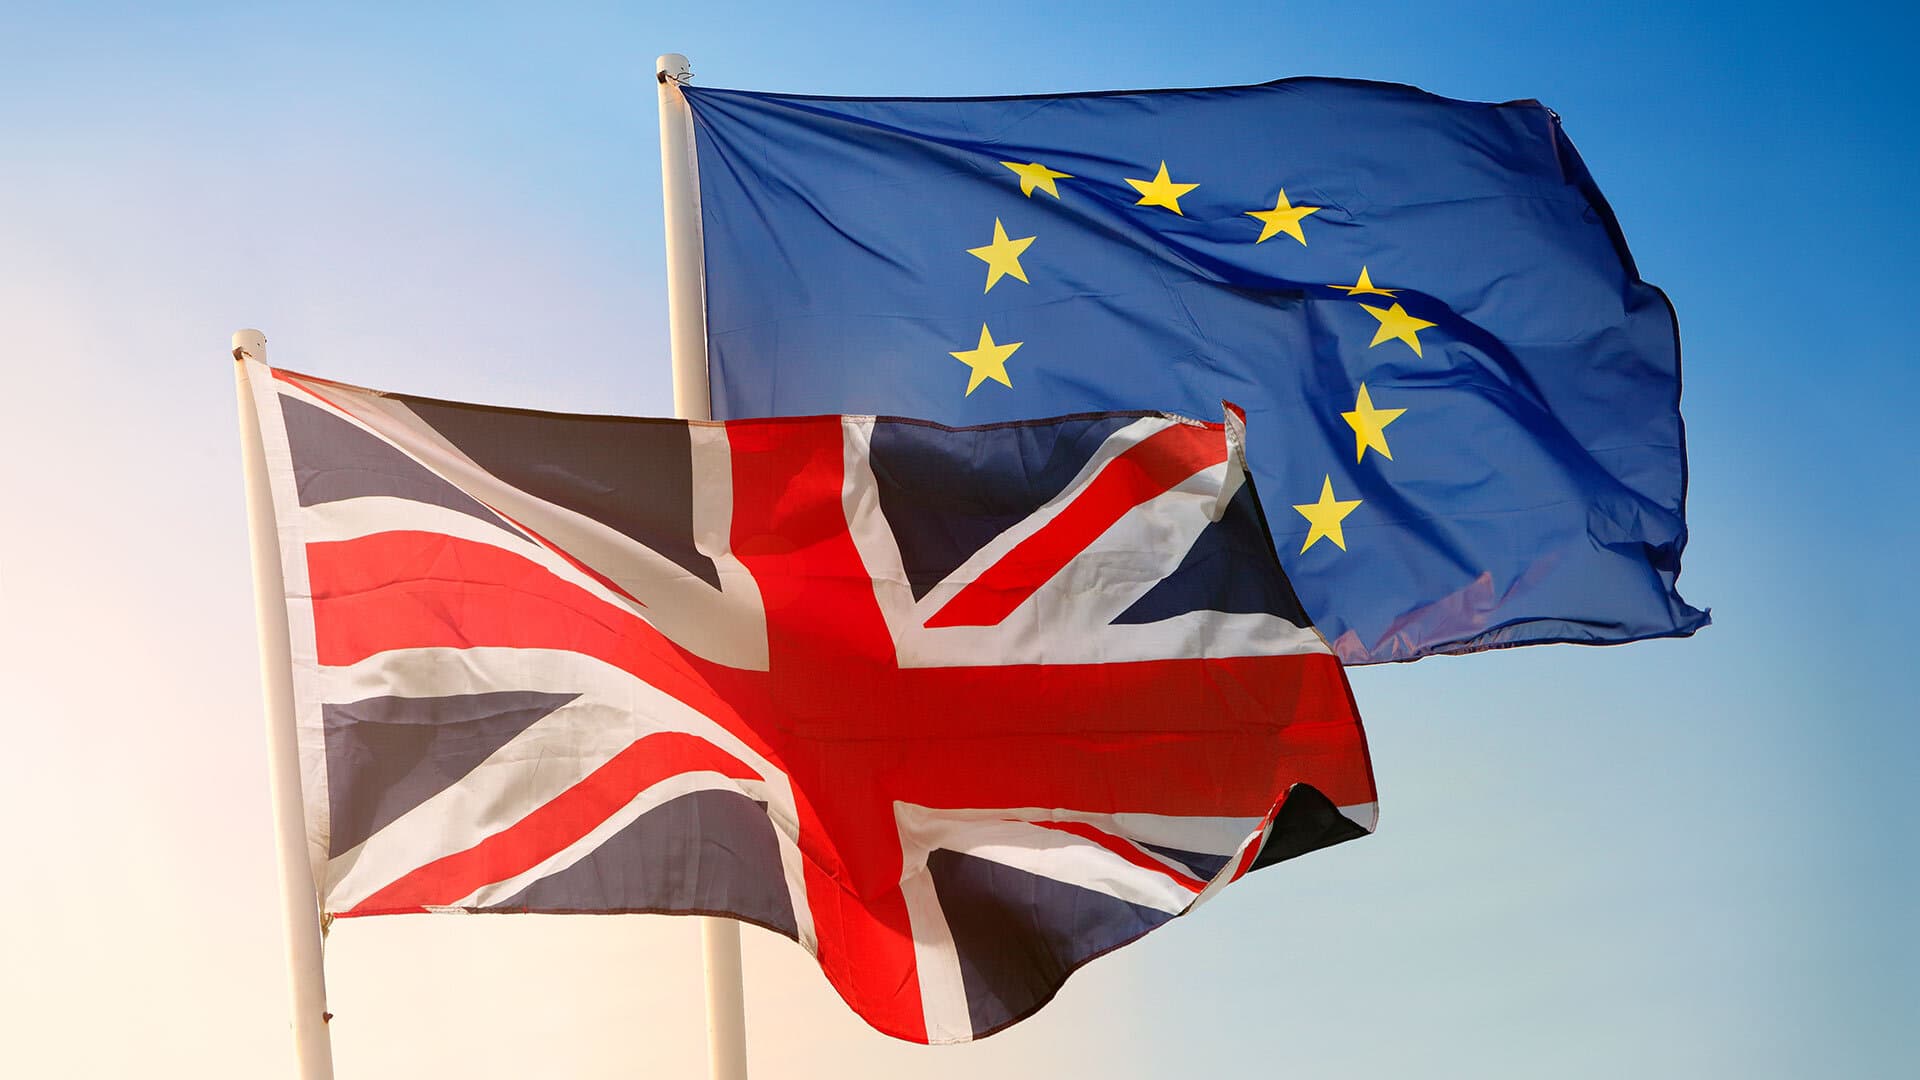 UK and EU flags flying